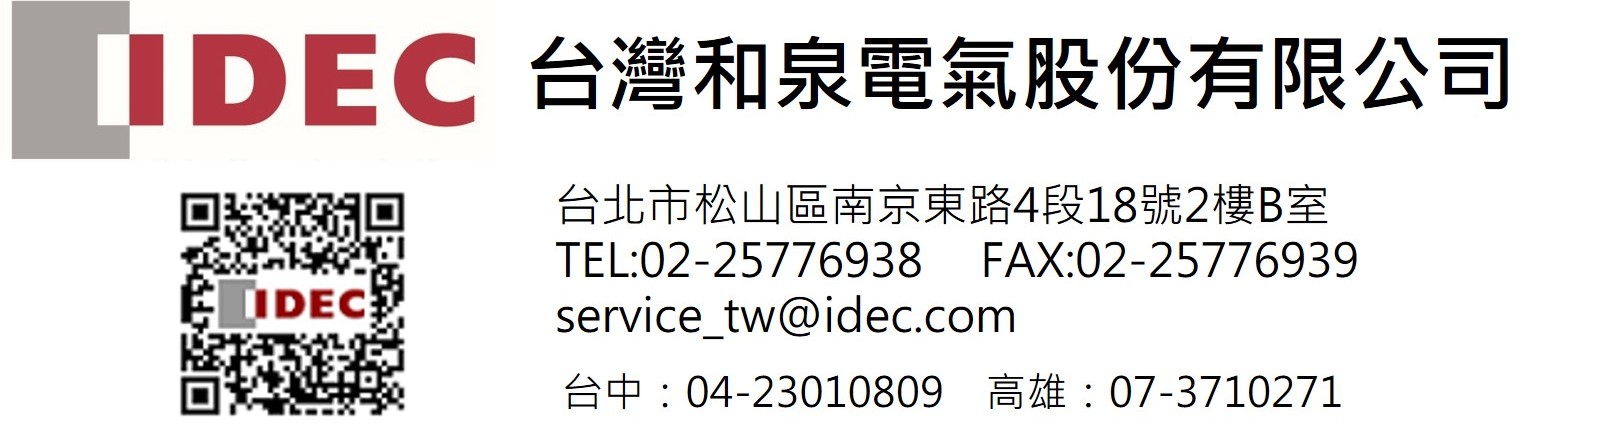 IDEC-TW-information.jpg